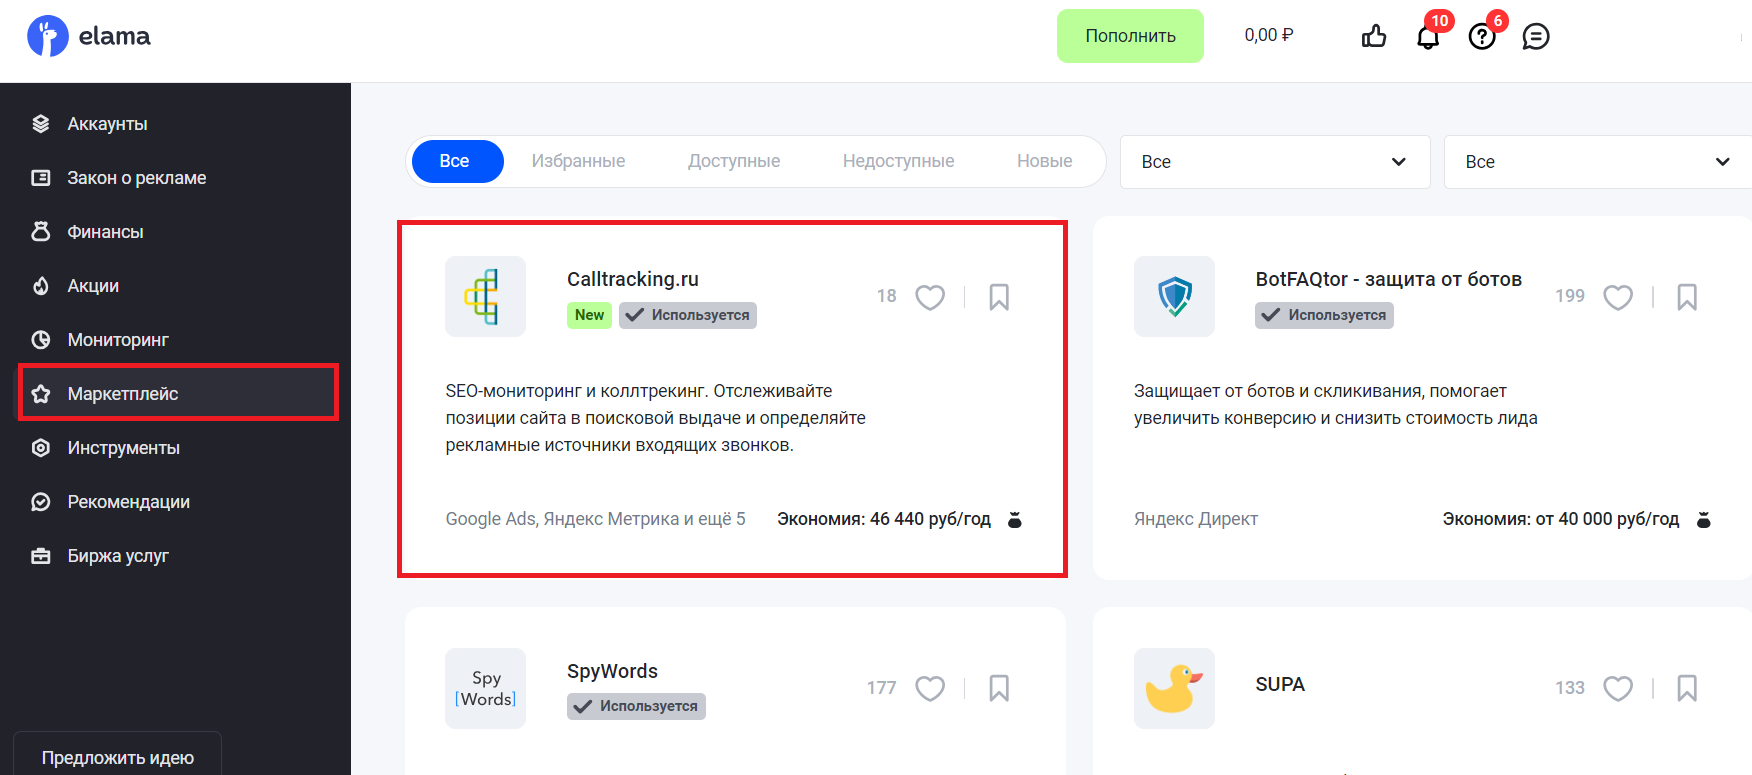 Calltracking.ru на бесплатном маркетплейсе eLama